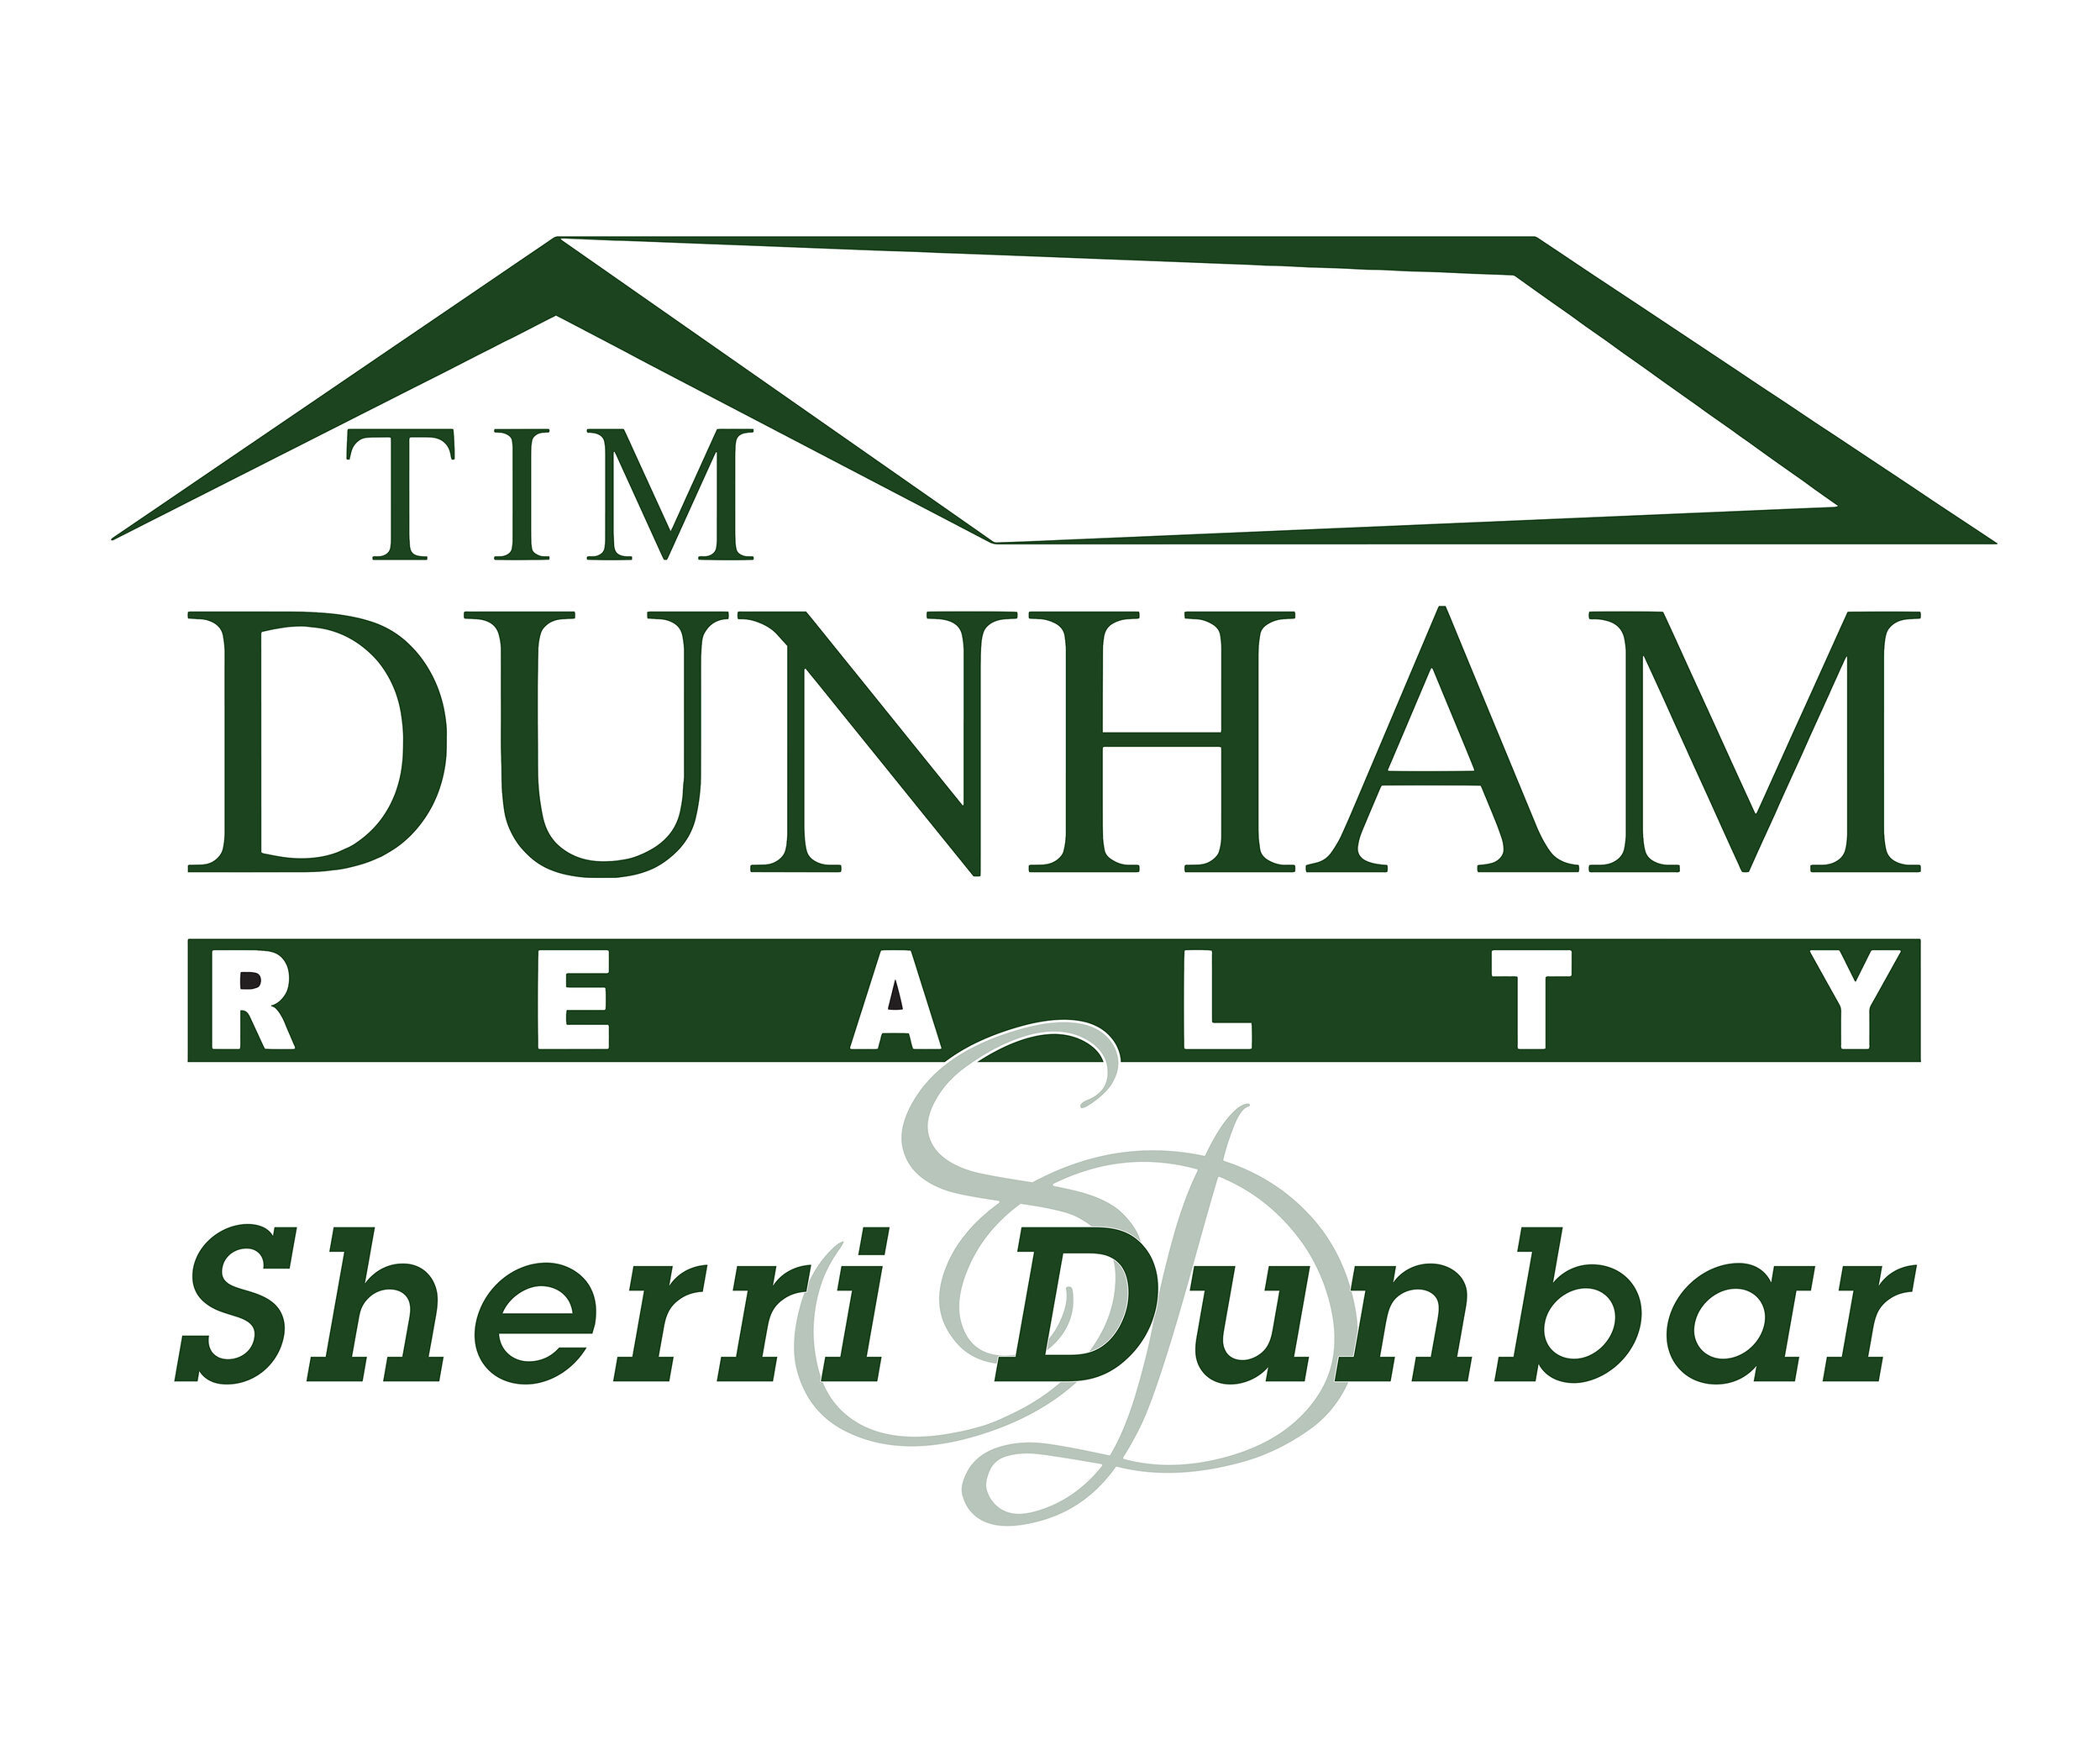 Tim Dunham Realty / Sherri Dunbar